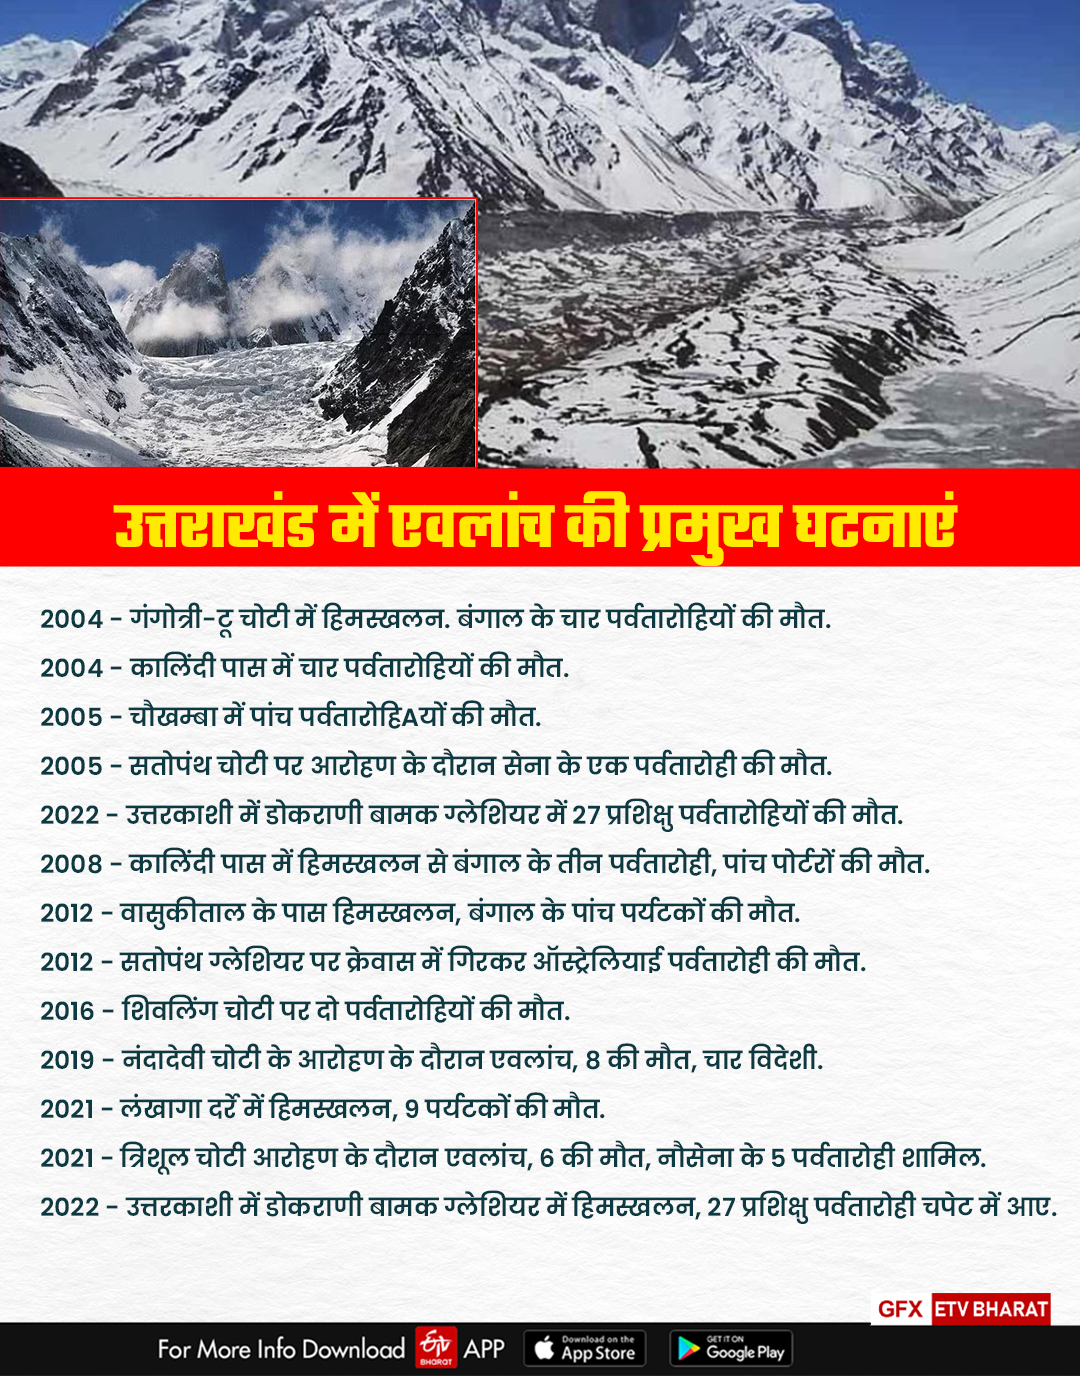 Glacier lakes in high Himalayan regions